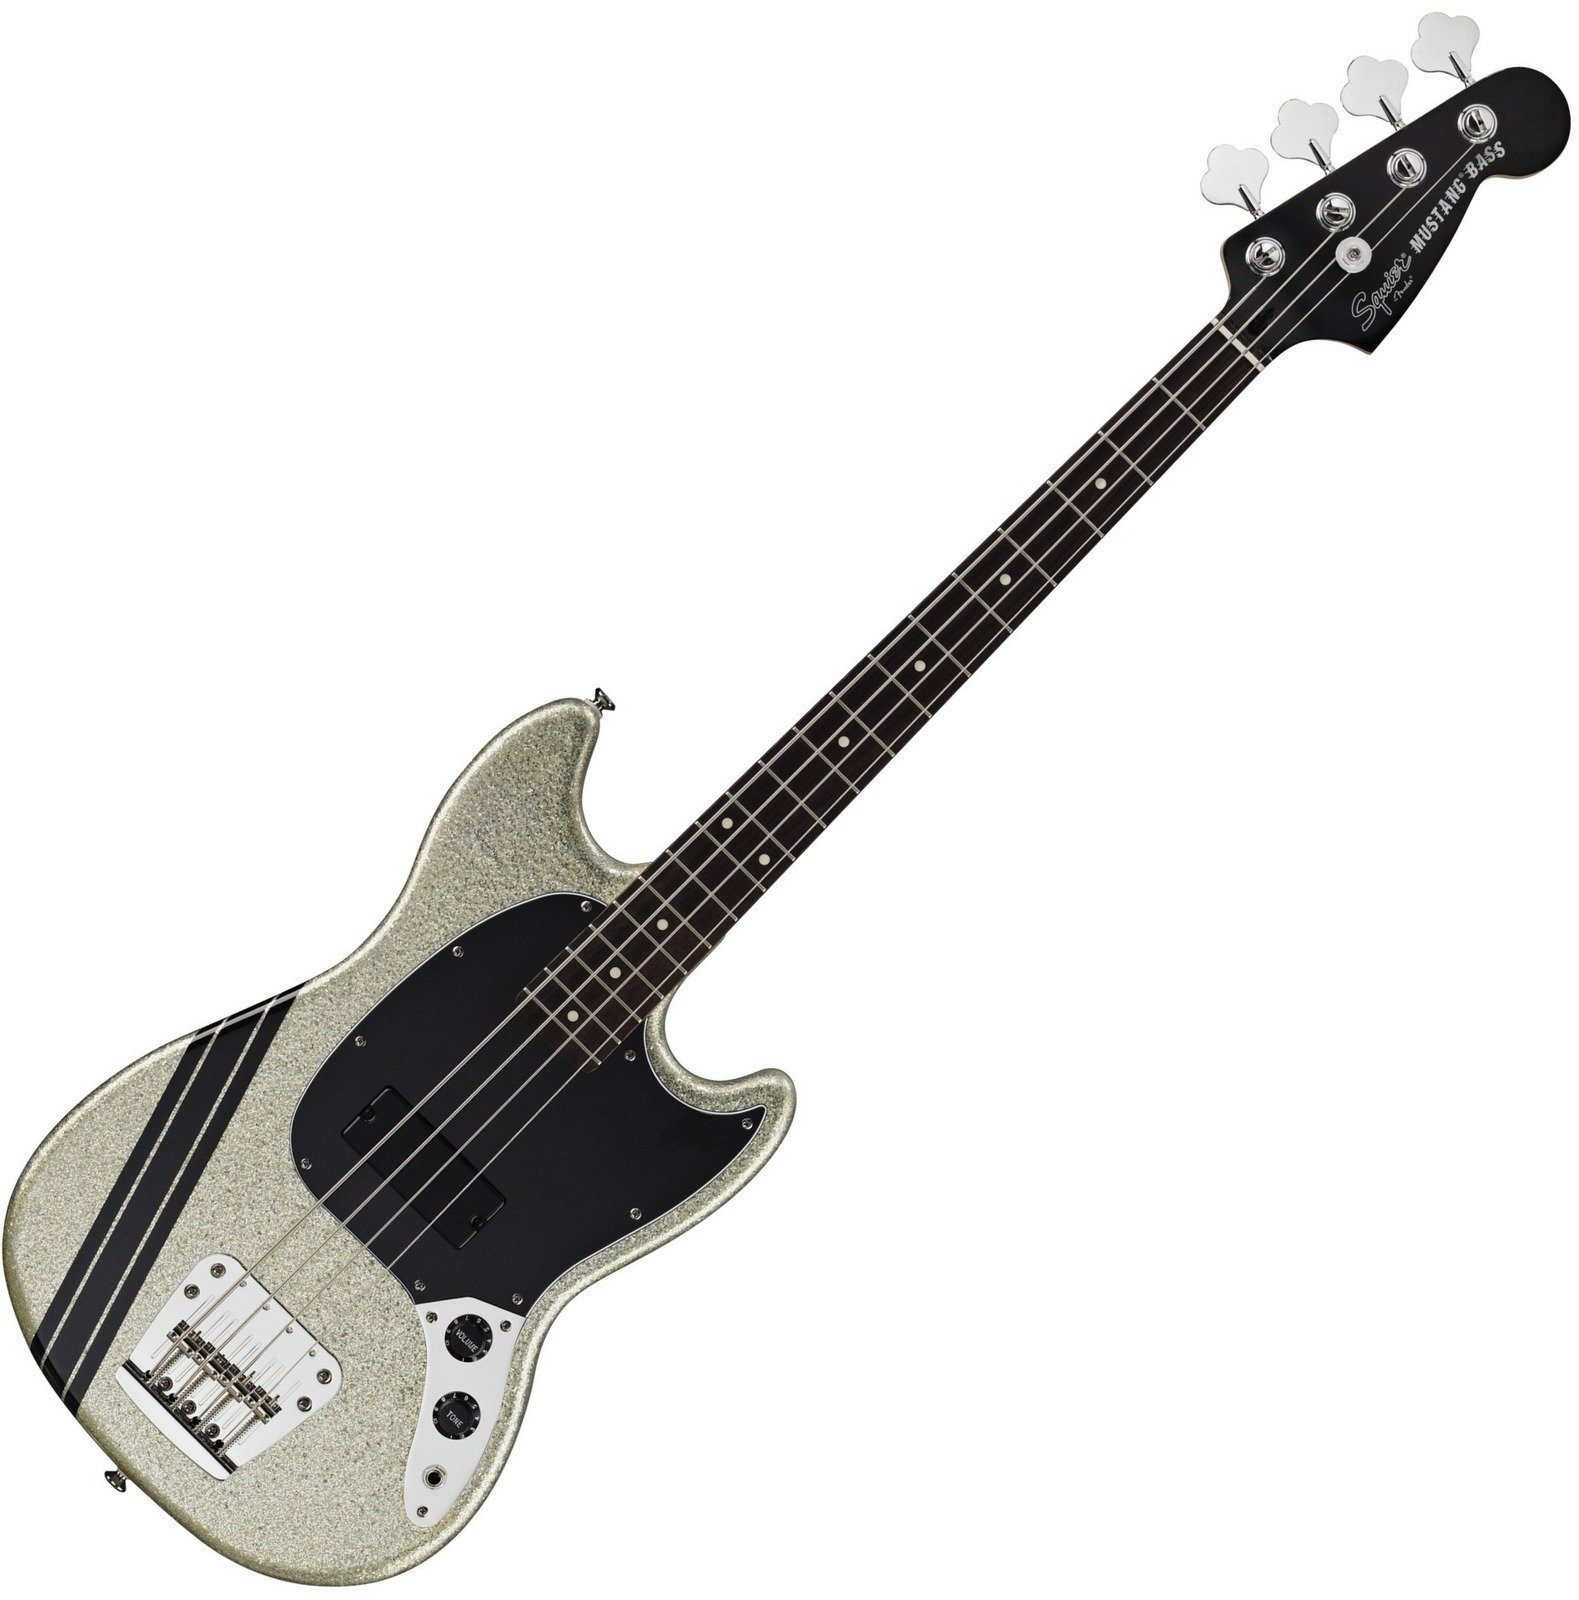 Basse électrique Fender Squier Mikey Way Mustang Bass Large Flake Silver Sparkle